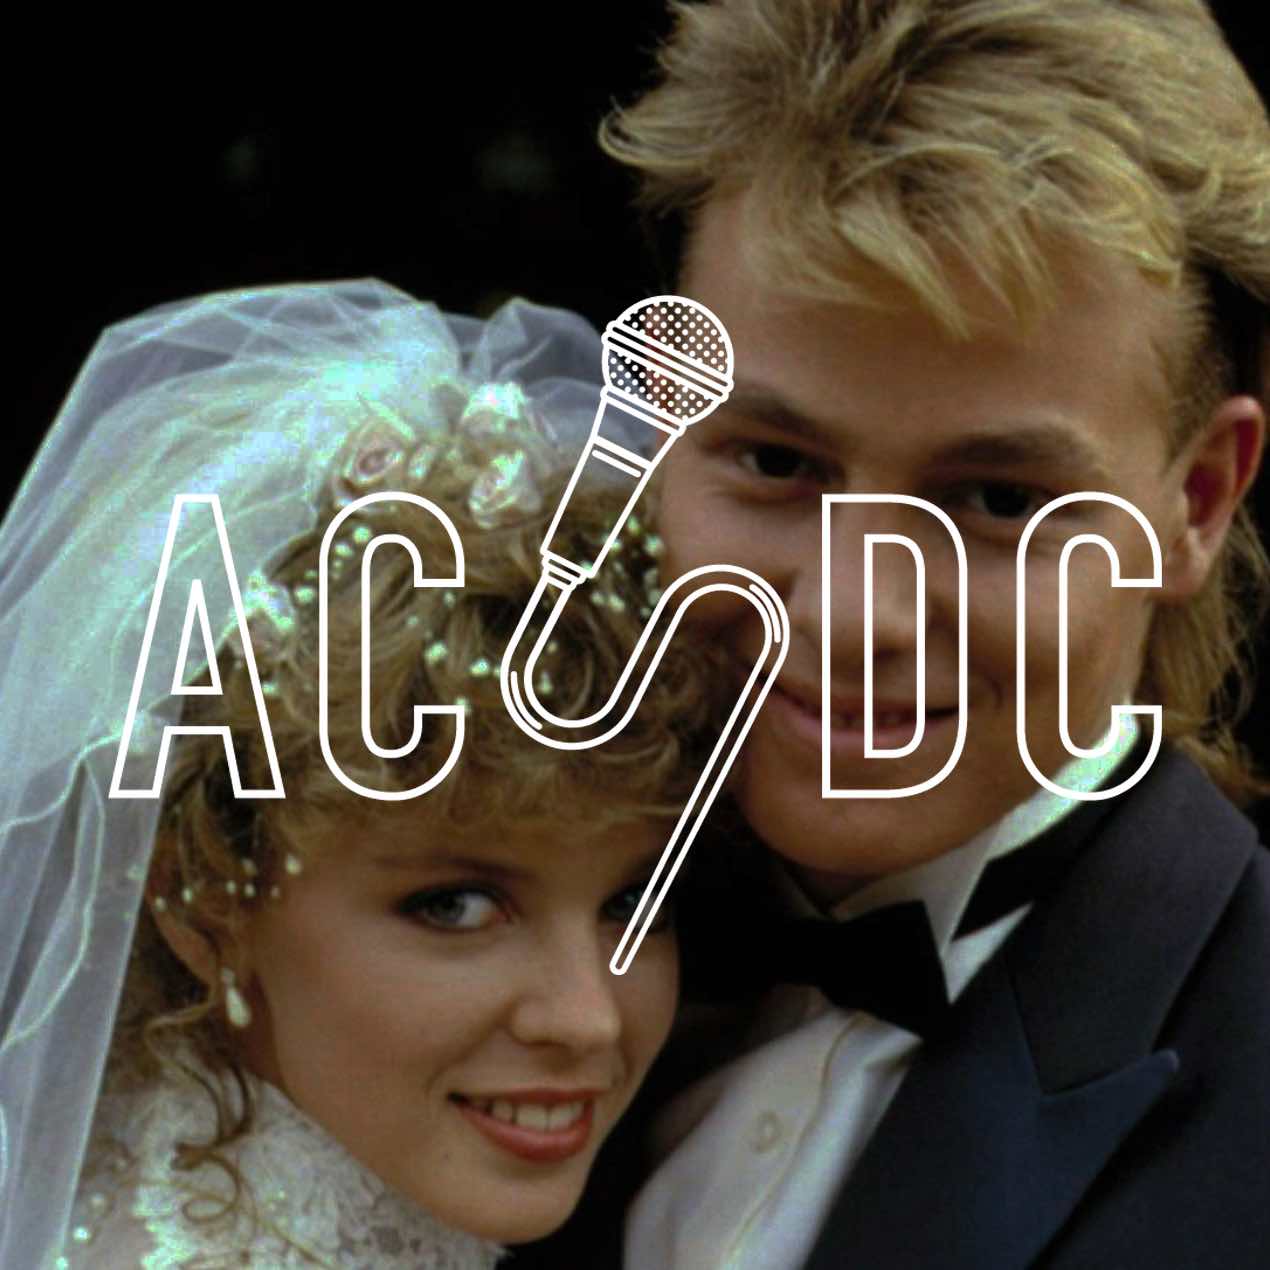 AC/DC: Australian Comedians / Dope Comedy